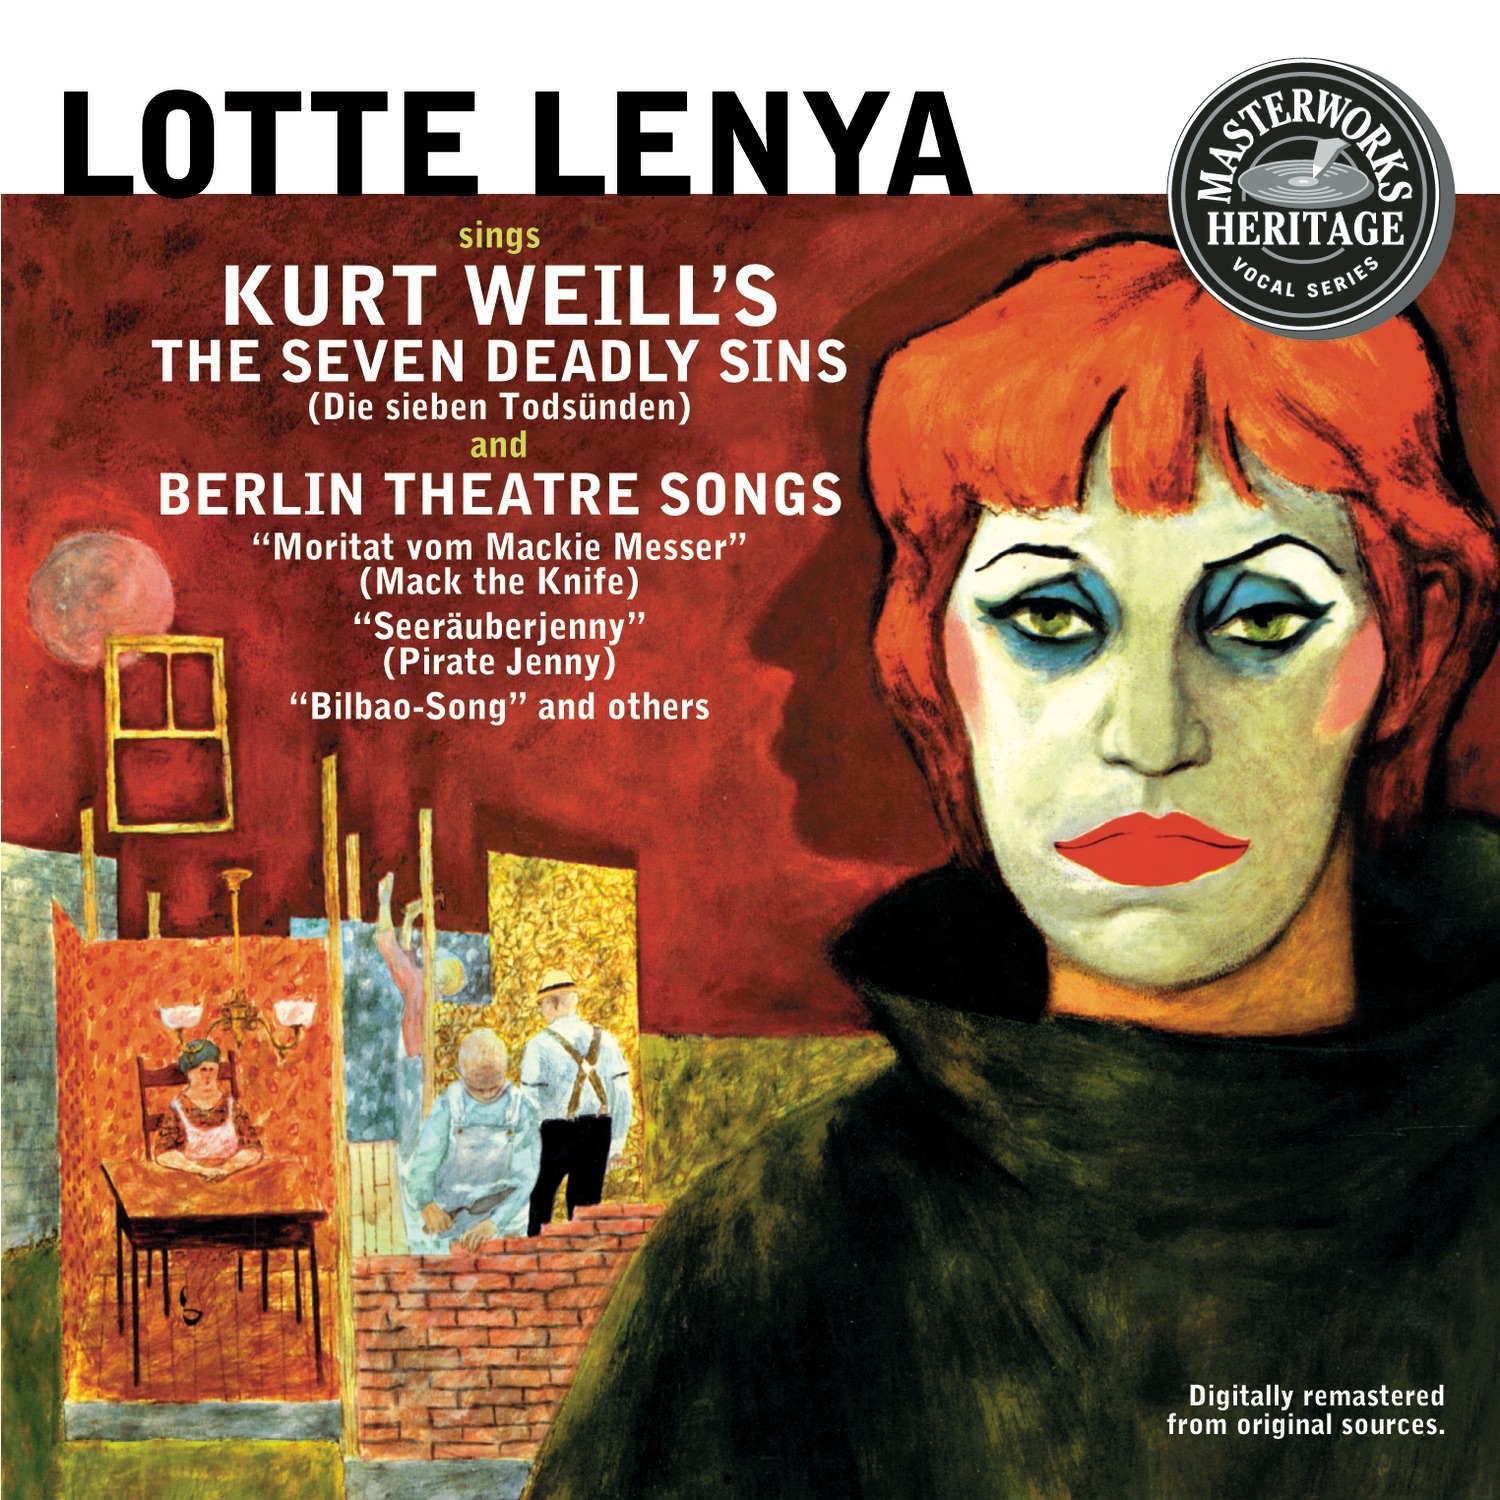 Theater песня. Lotte Lenya. Курт Вайль и Лотте Ленье. Lotte Lenya Sings Berlin Theater (Original album 1955). Lotte Lenya the Threepenny Opera..